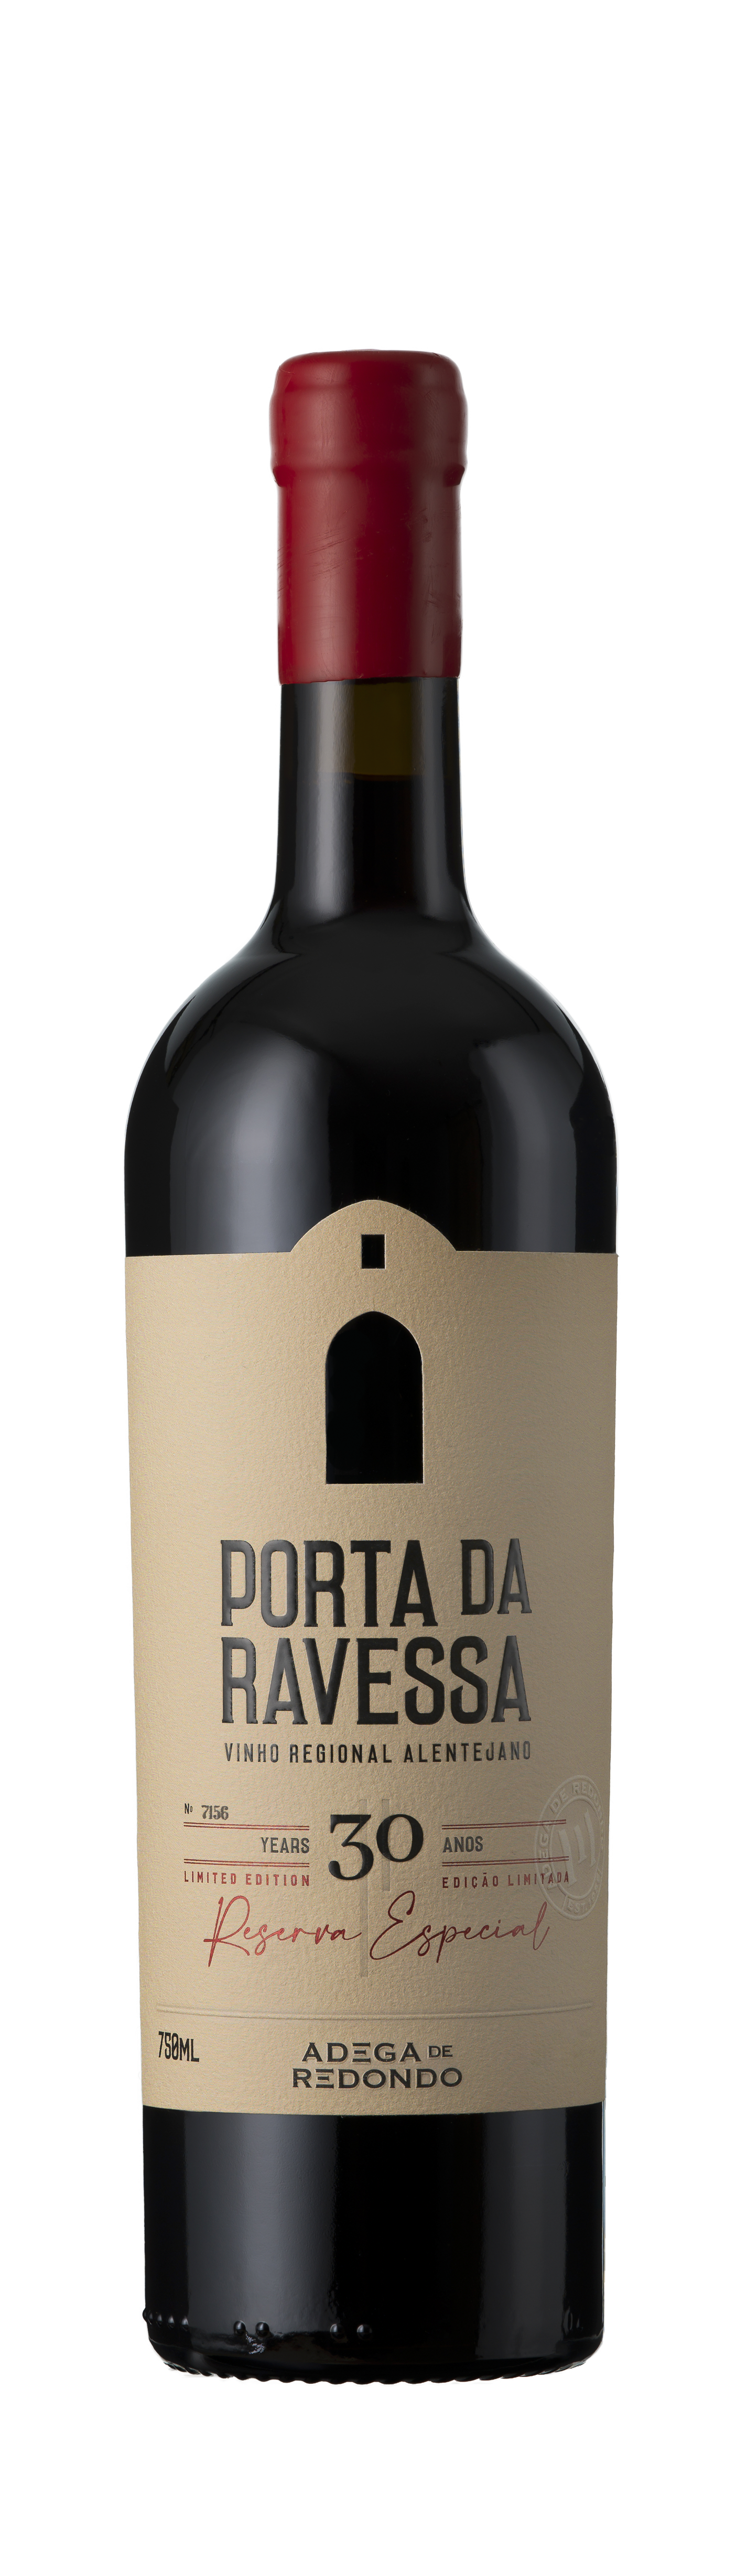 Adega de Redondo, Porta - Portugal, da Alentejo, IGP Tinto (30yr), Reserva Alliance Wine especial Ravessa 2017